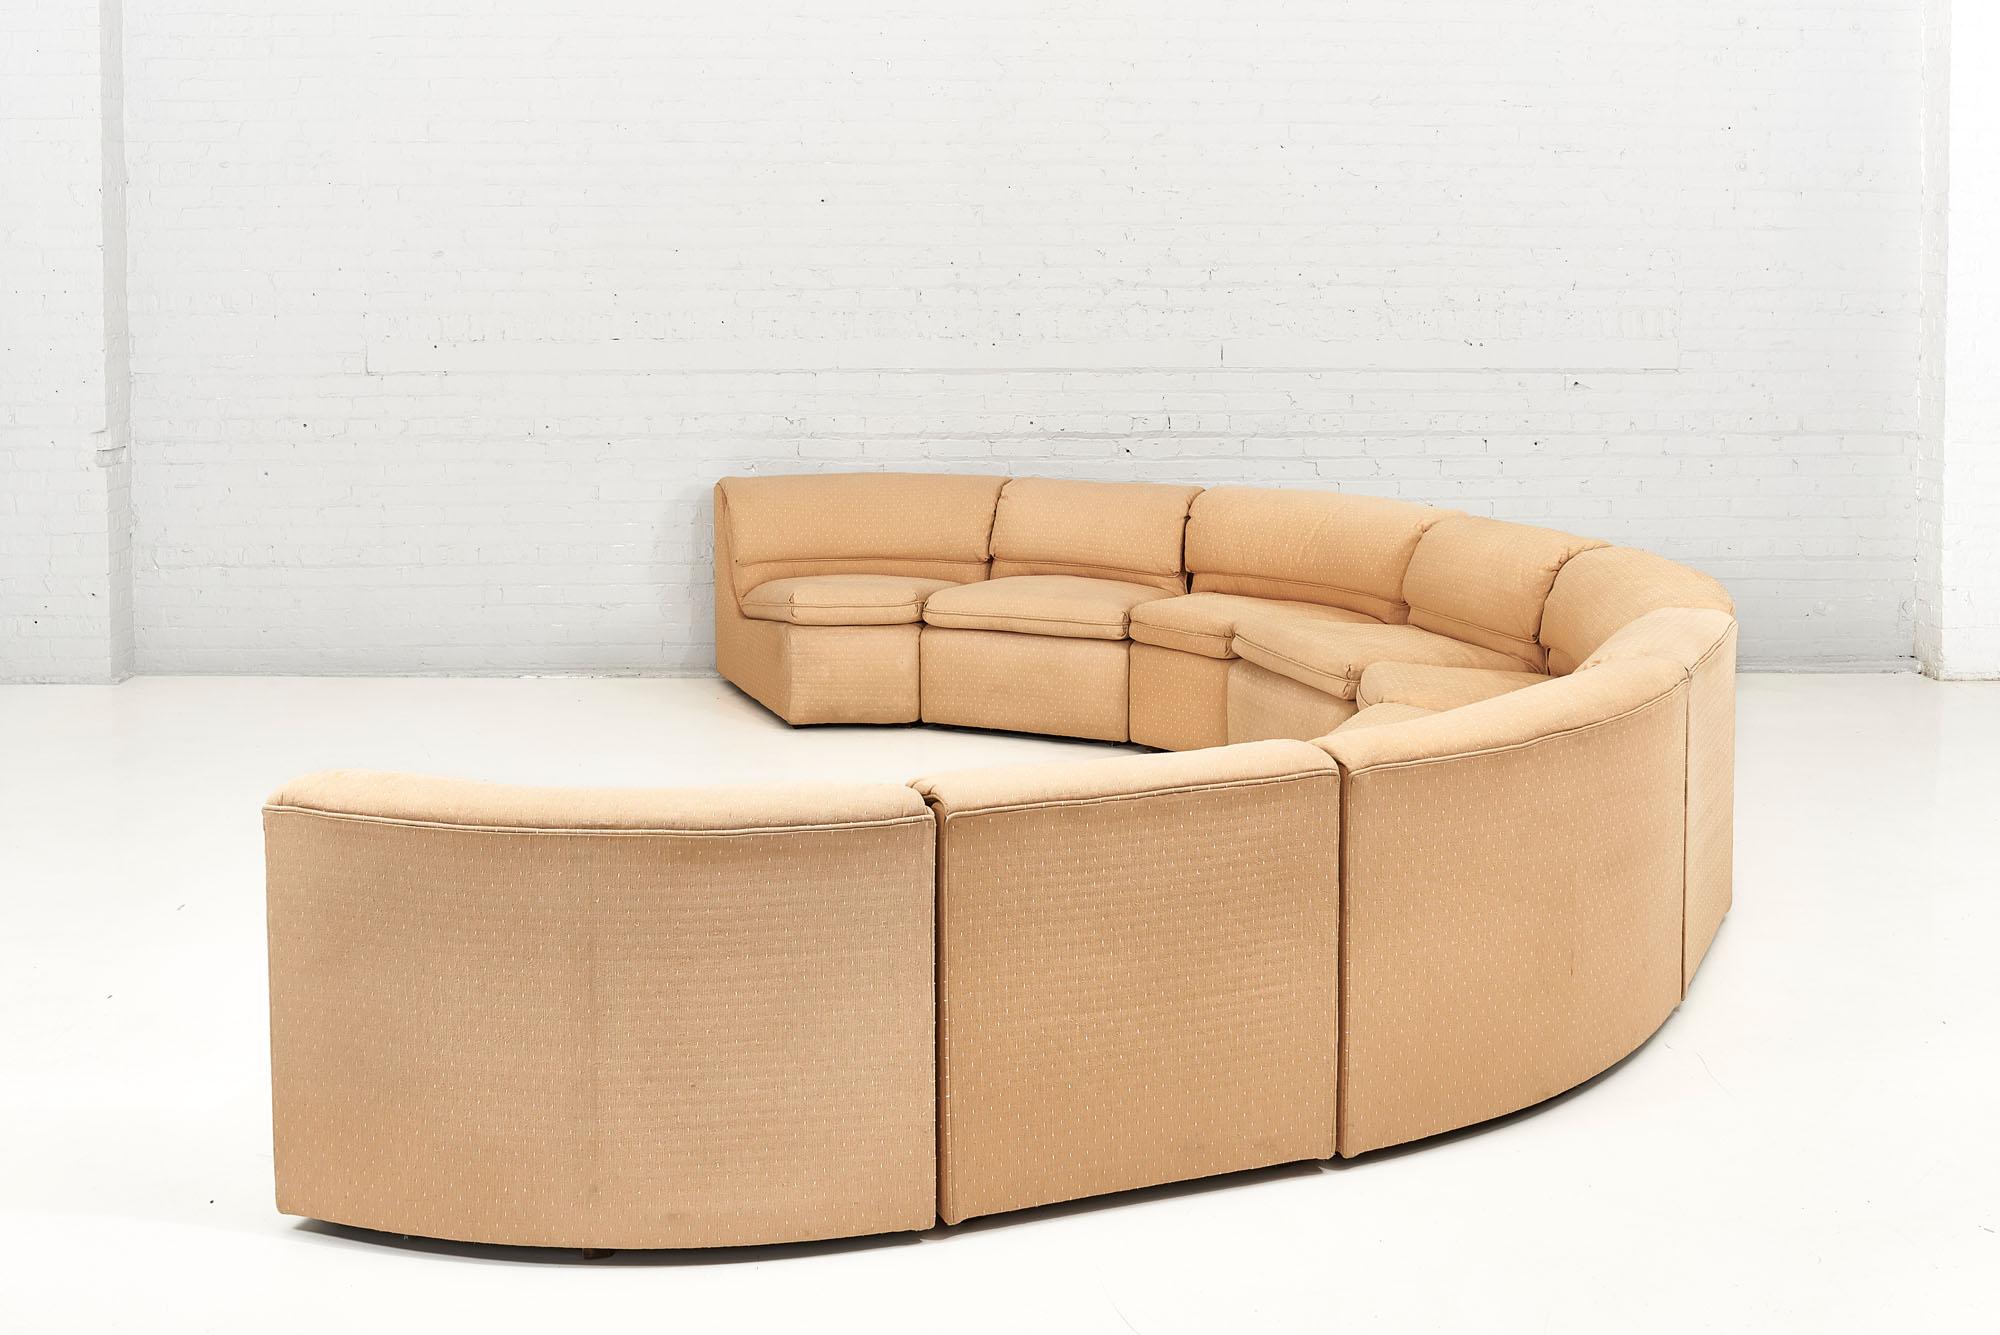 9teiliges modulares Halb-Circle-Sofa, 1970 (amerikanisch)